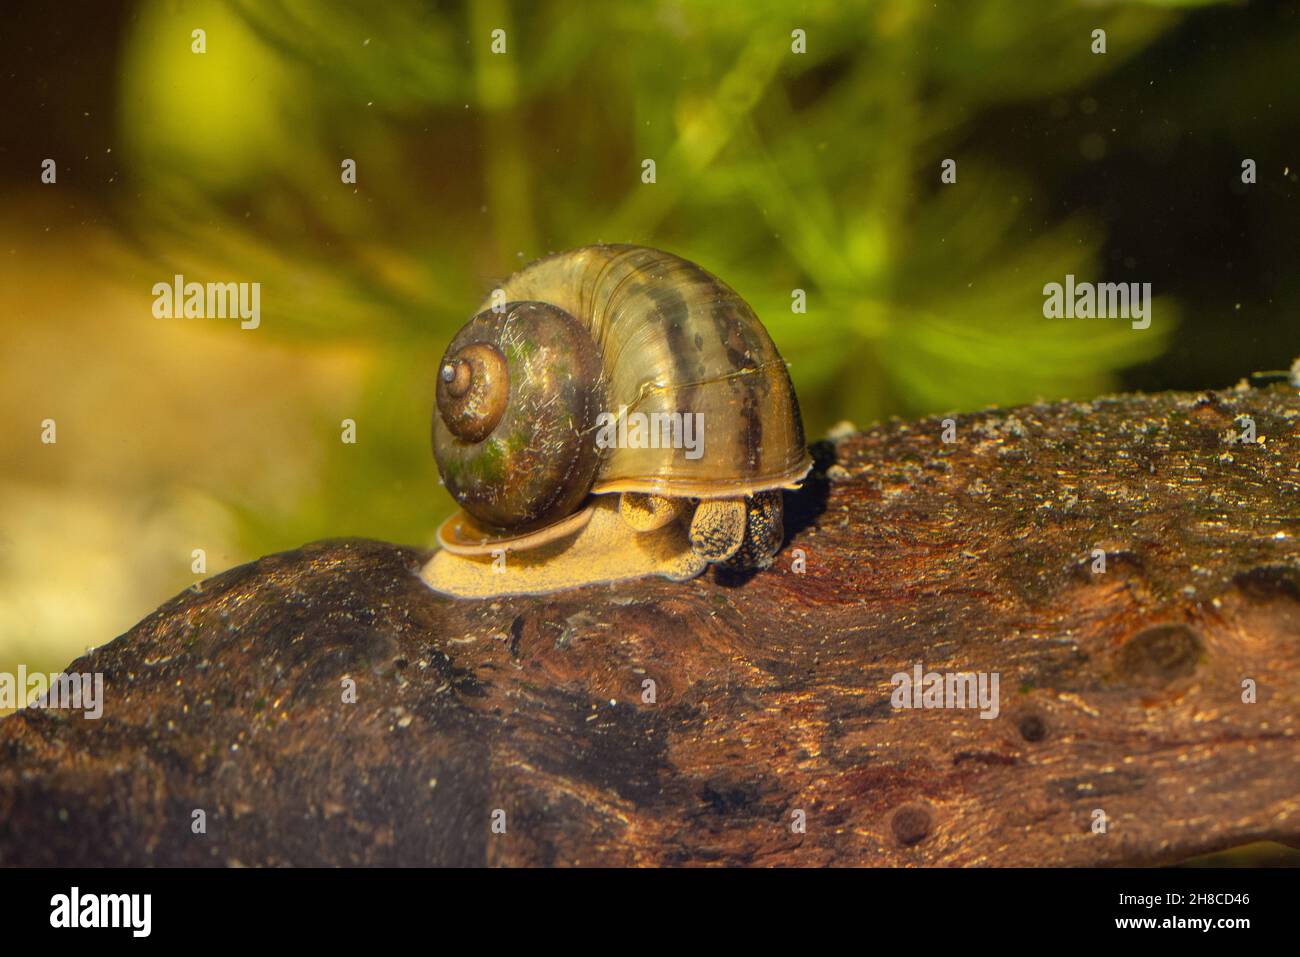 river snail (Viviparus spec.), juvenile, feeding aufwuchs from deadwood, Germany Stock Photo